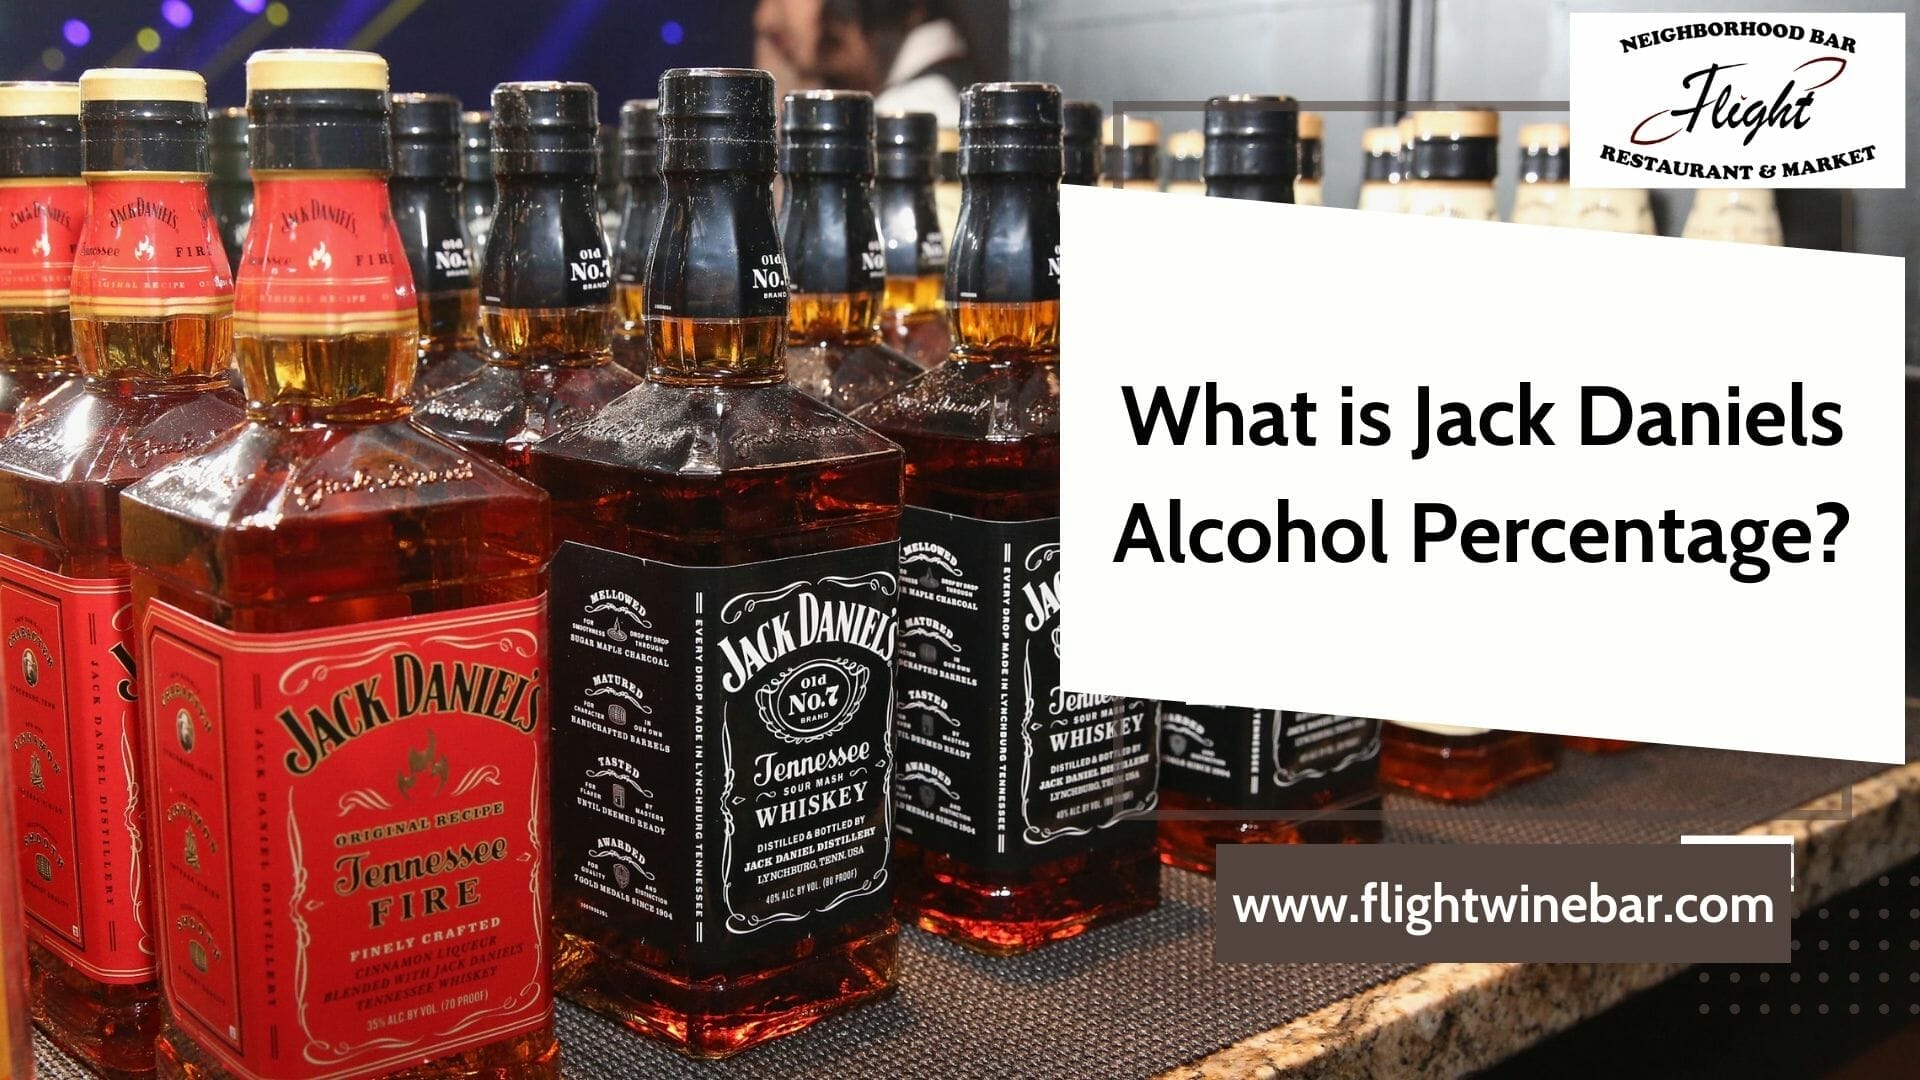 Jack Daniels Alcohol Percentage